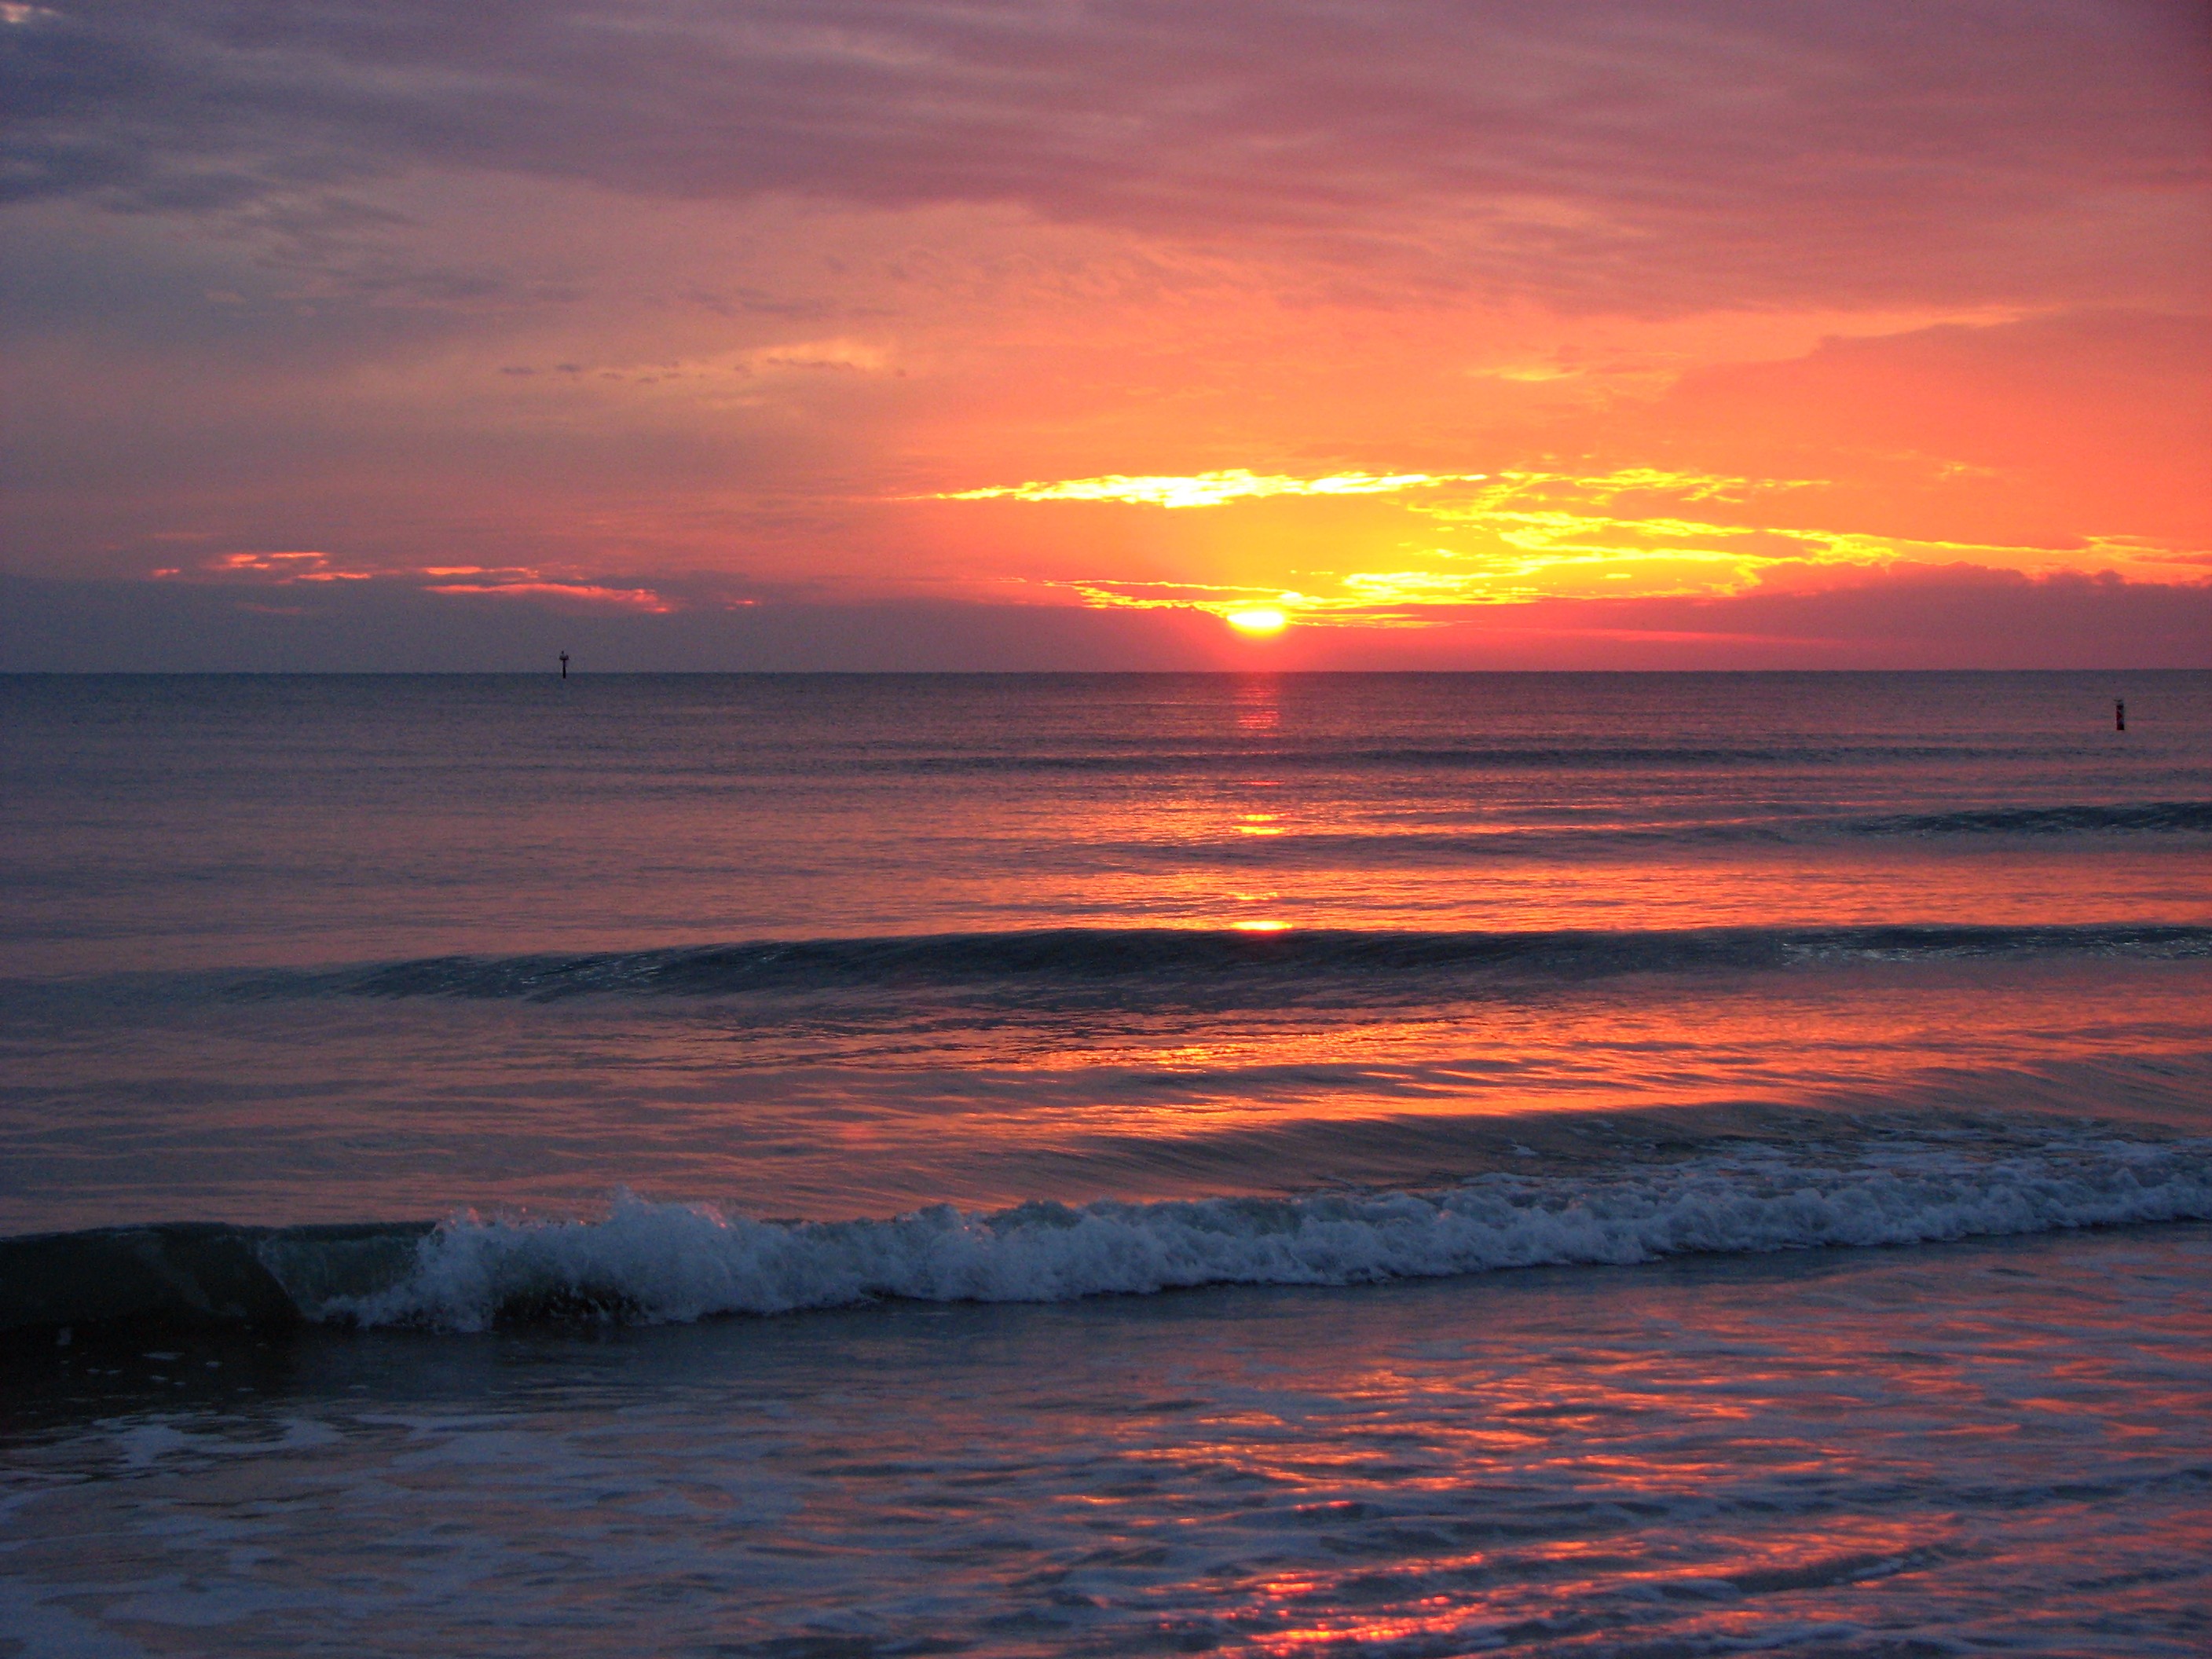 A beach and ocean sunset photo